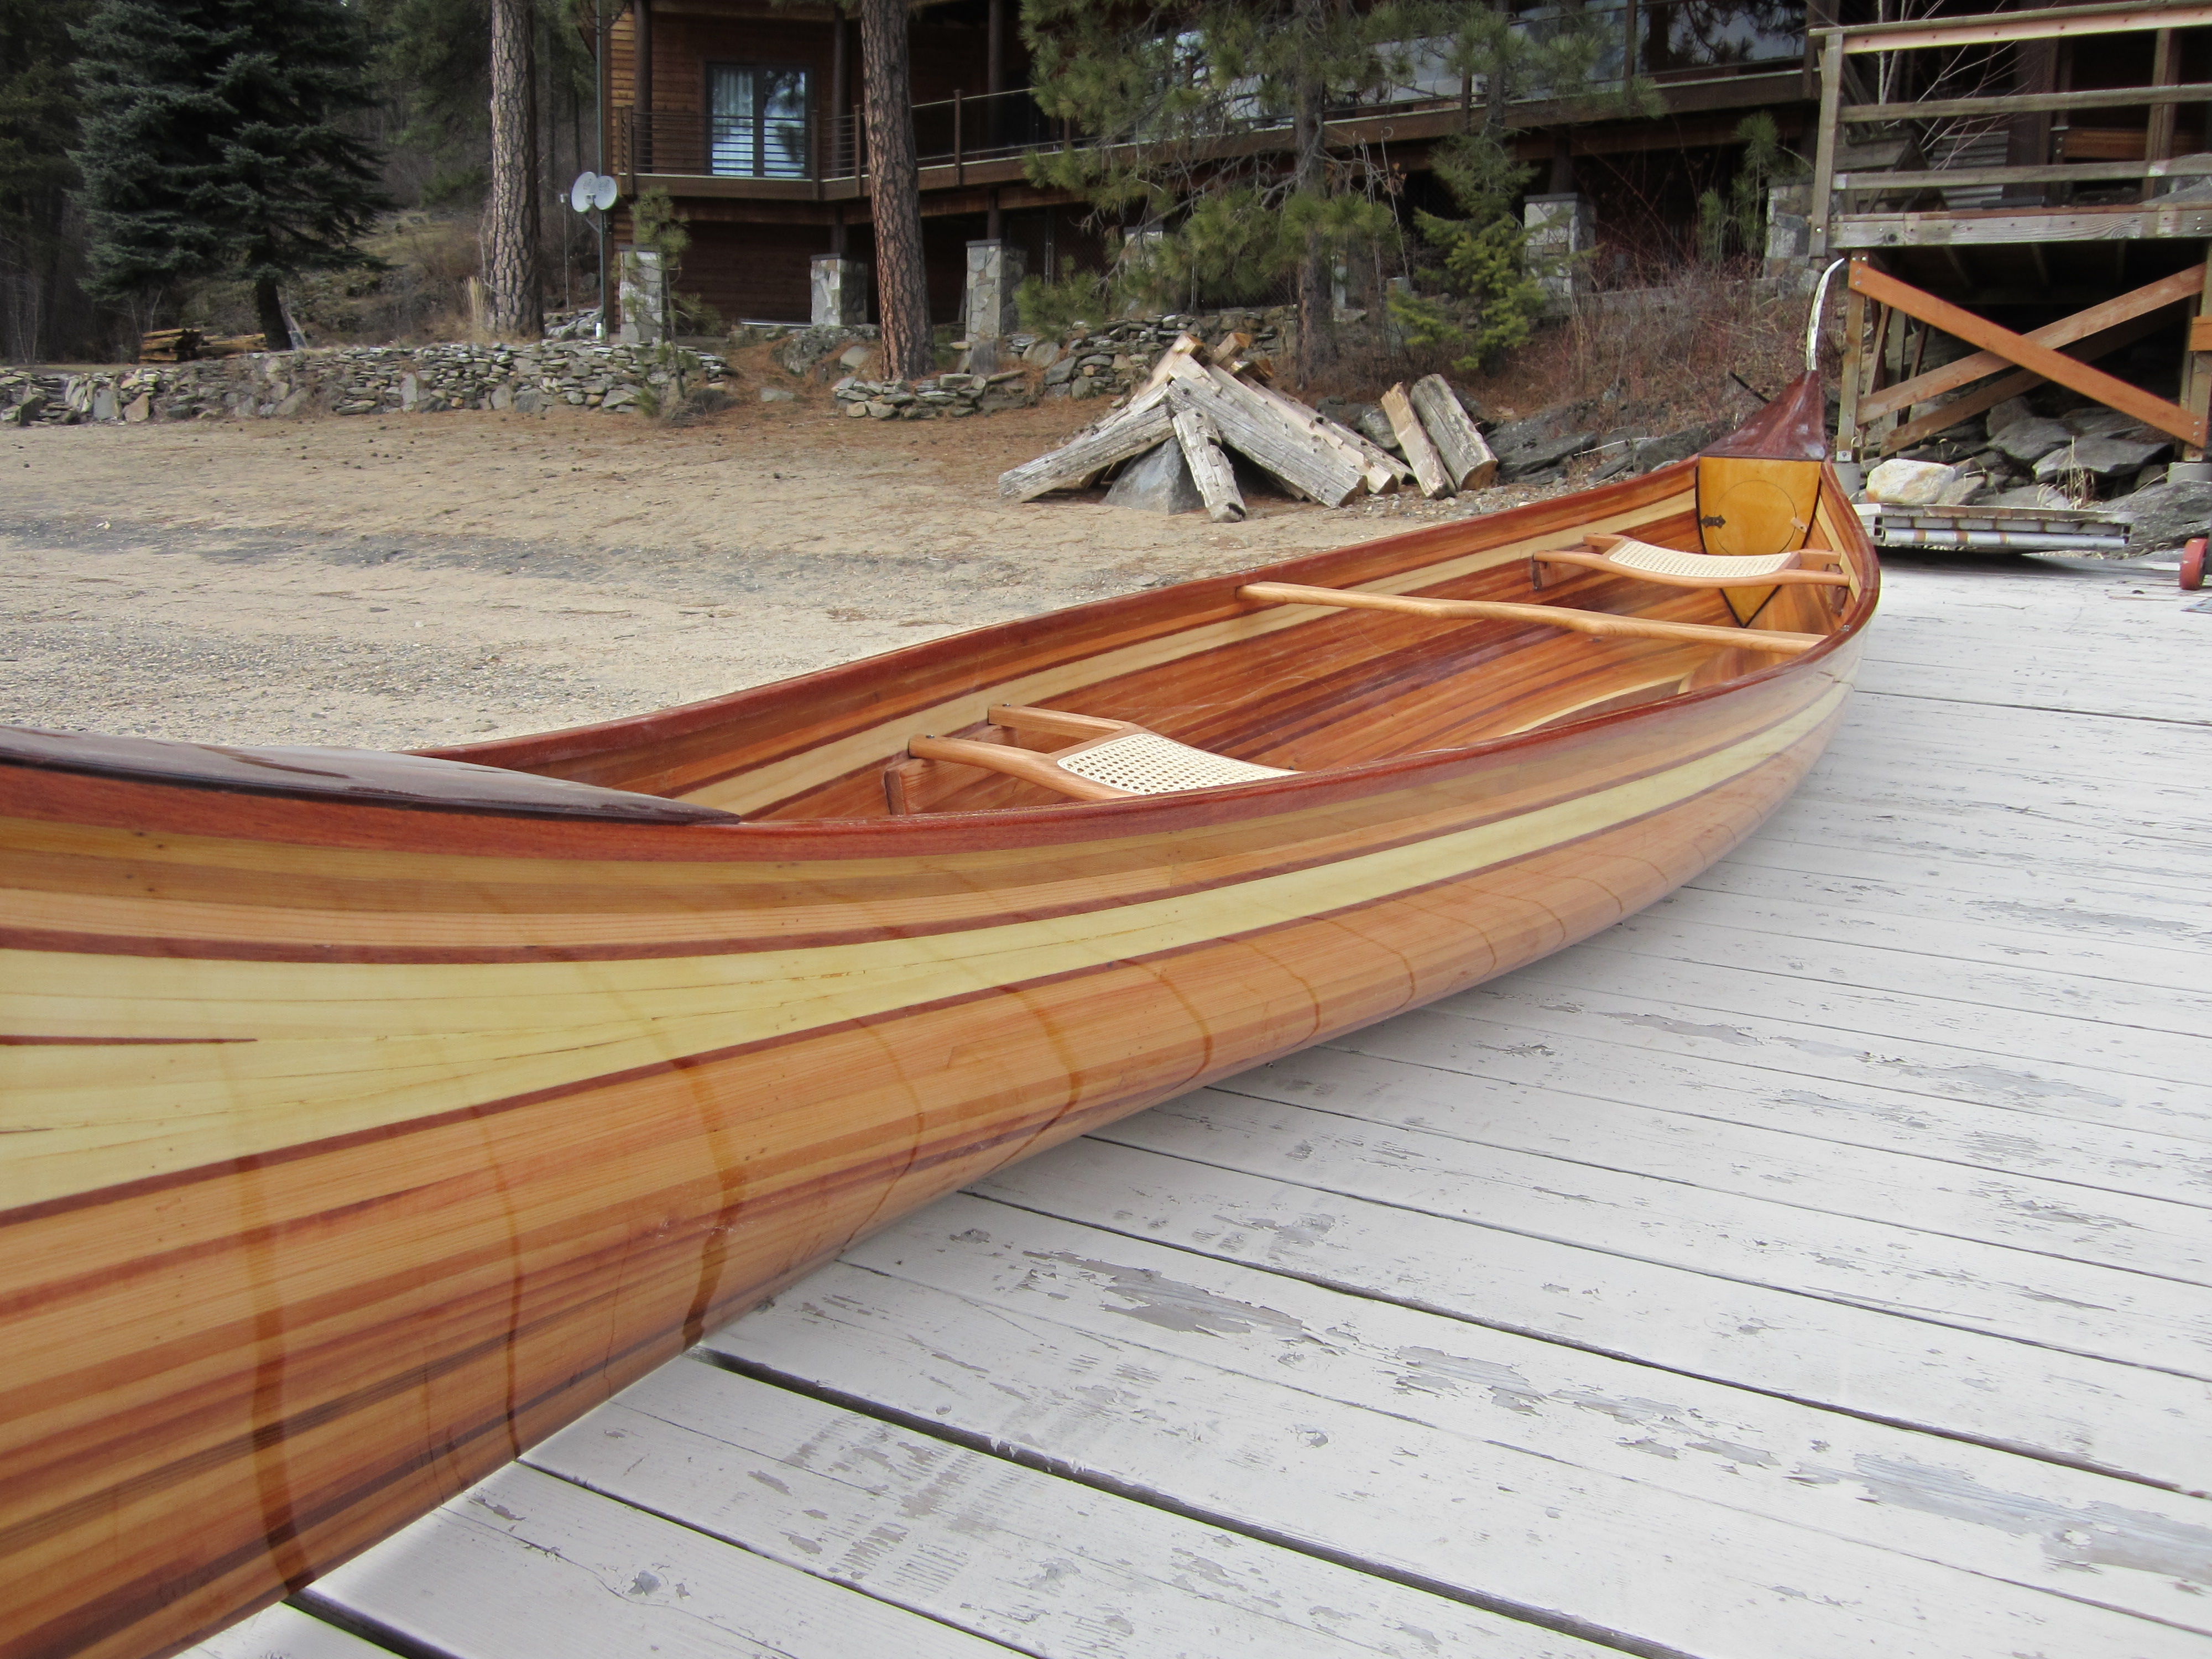 wood strip canoe. mahogany decks/gunnels and ash seats